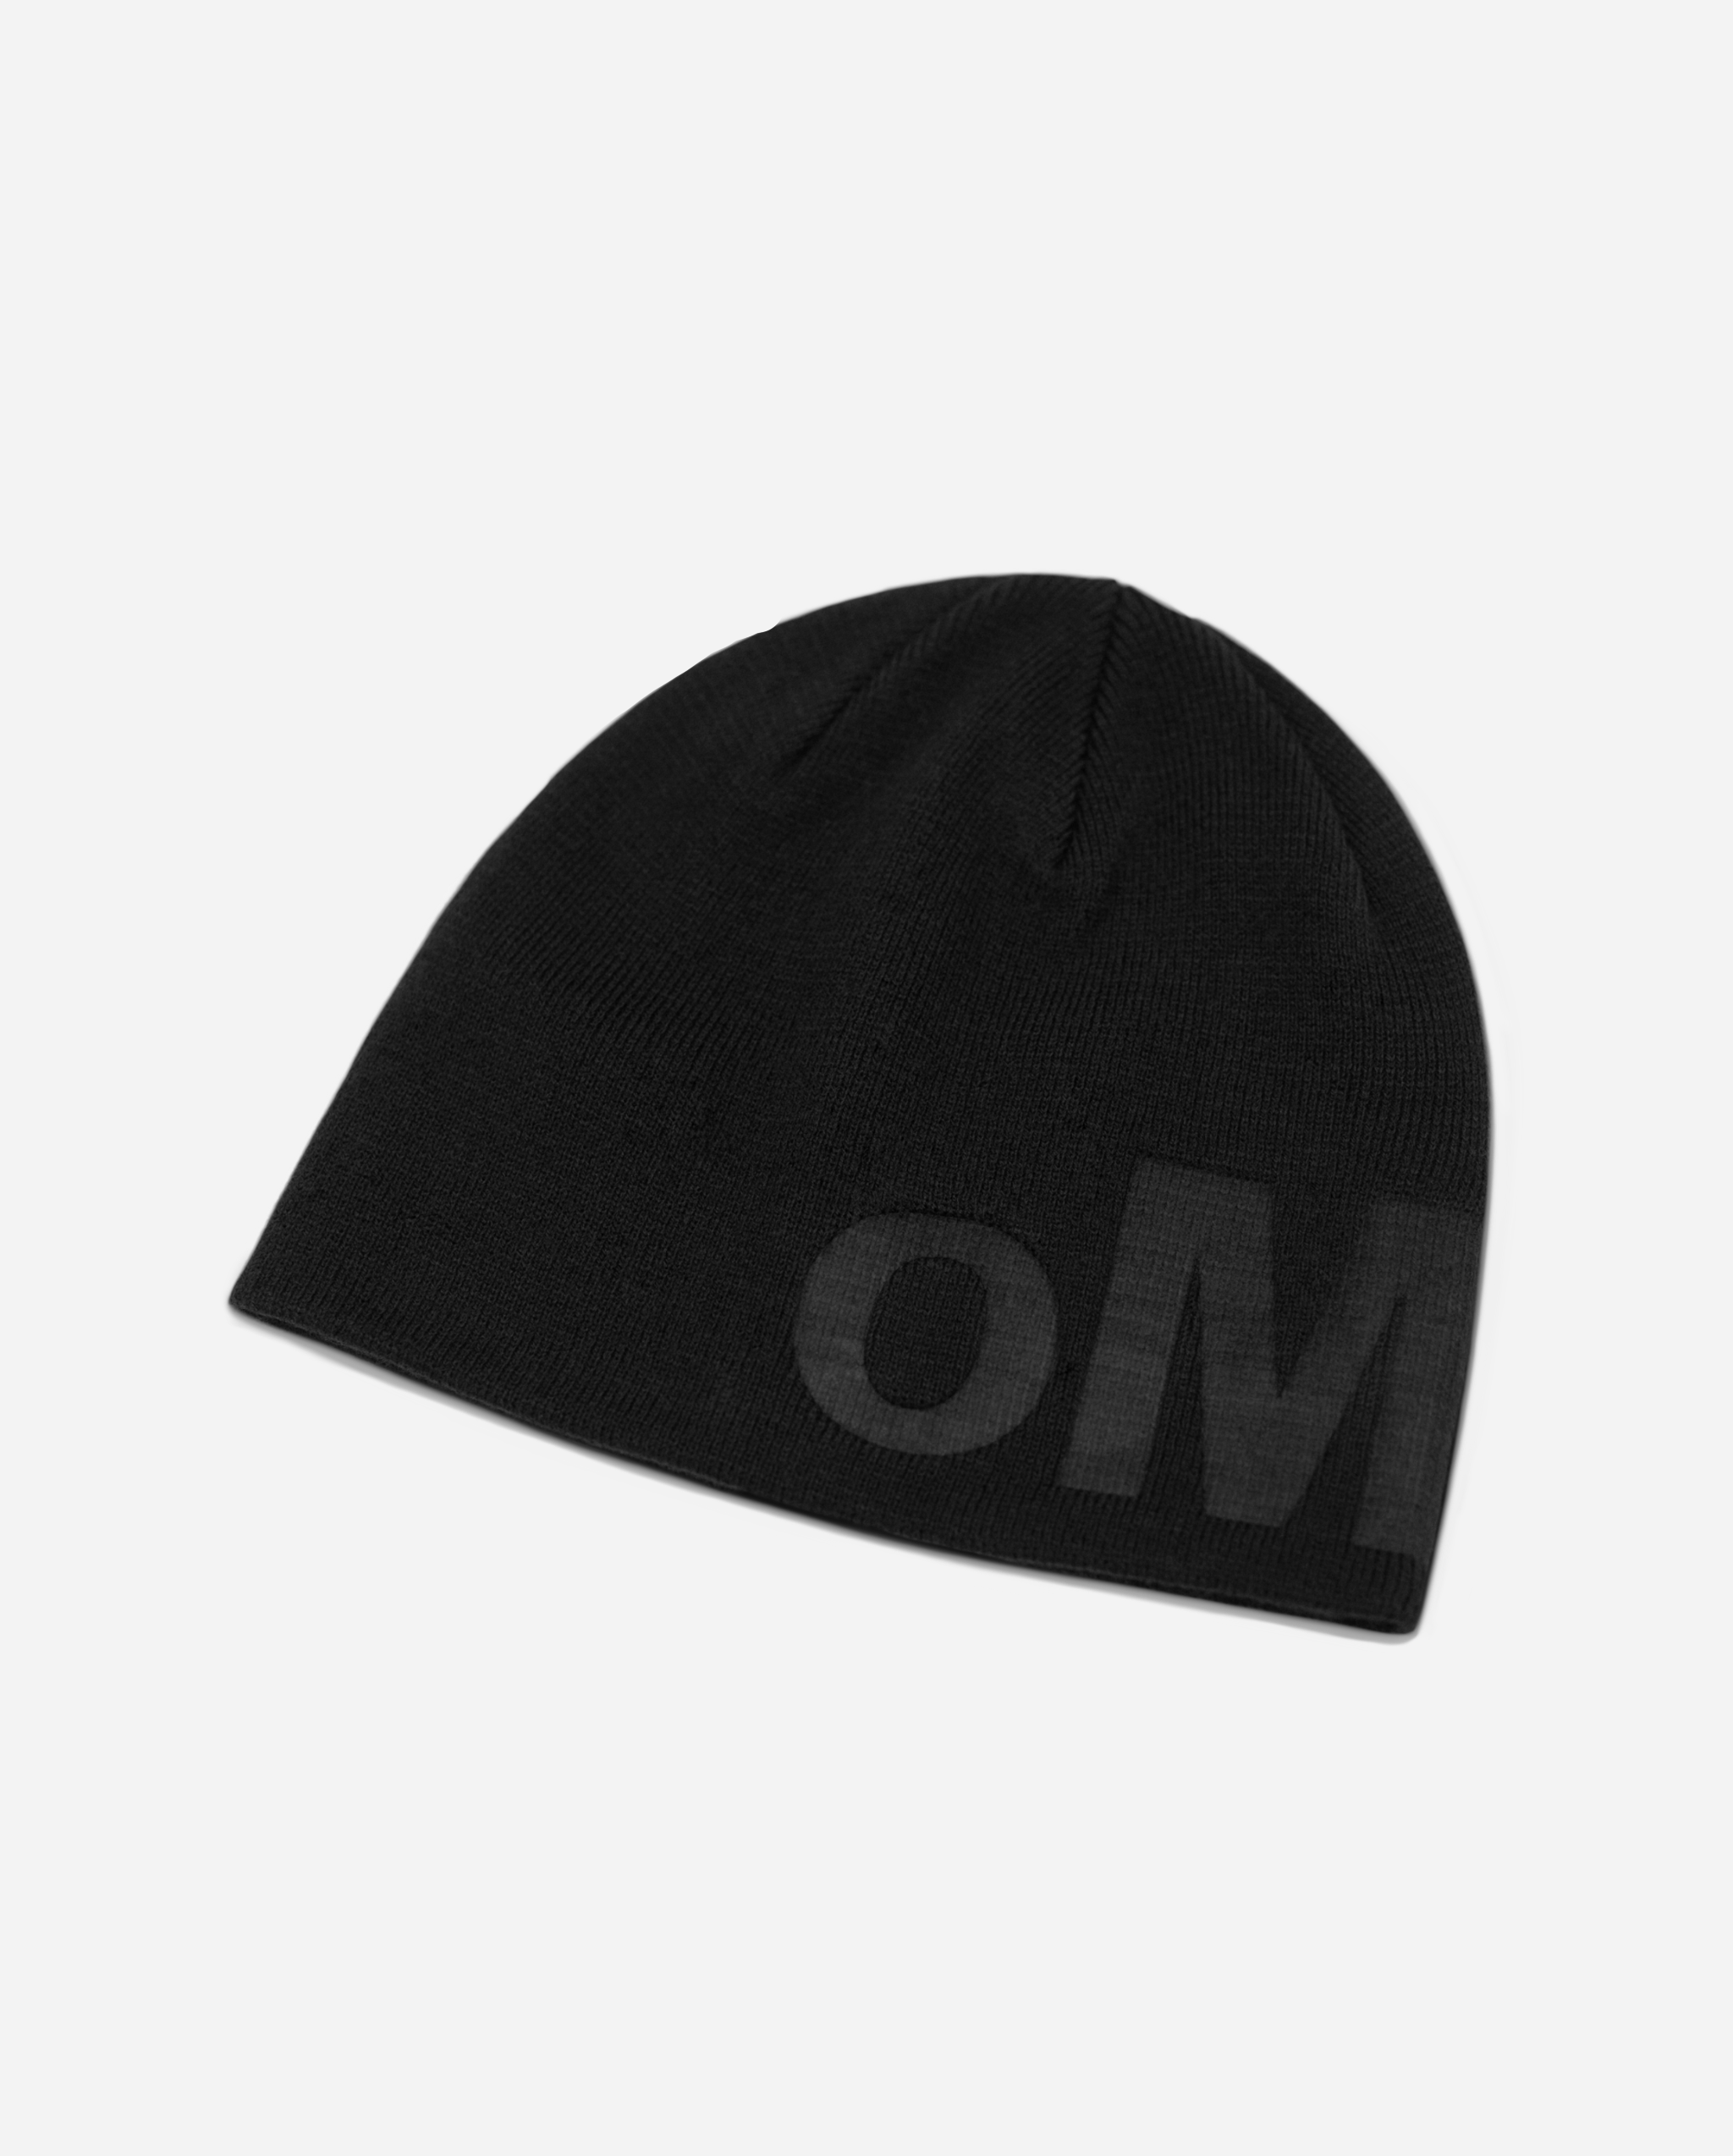 oMA EMBOSSED SKULL CAP (BLACK)